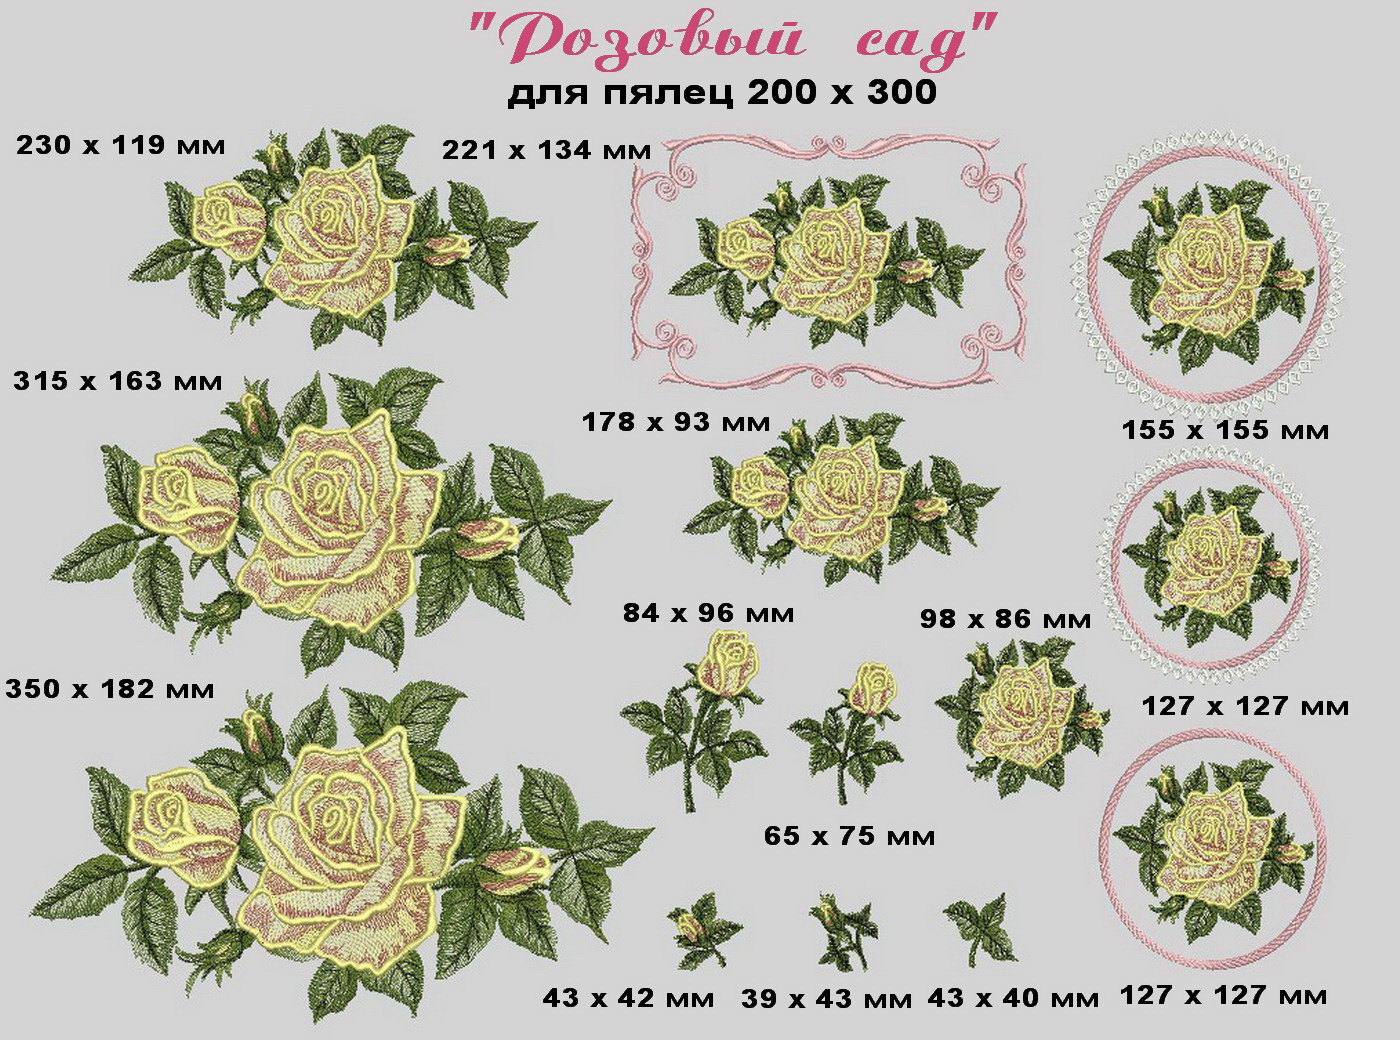 Розовый сад демо 200 300